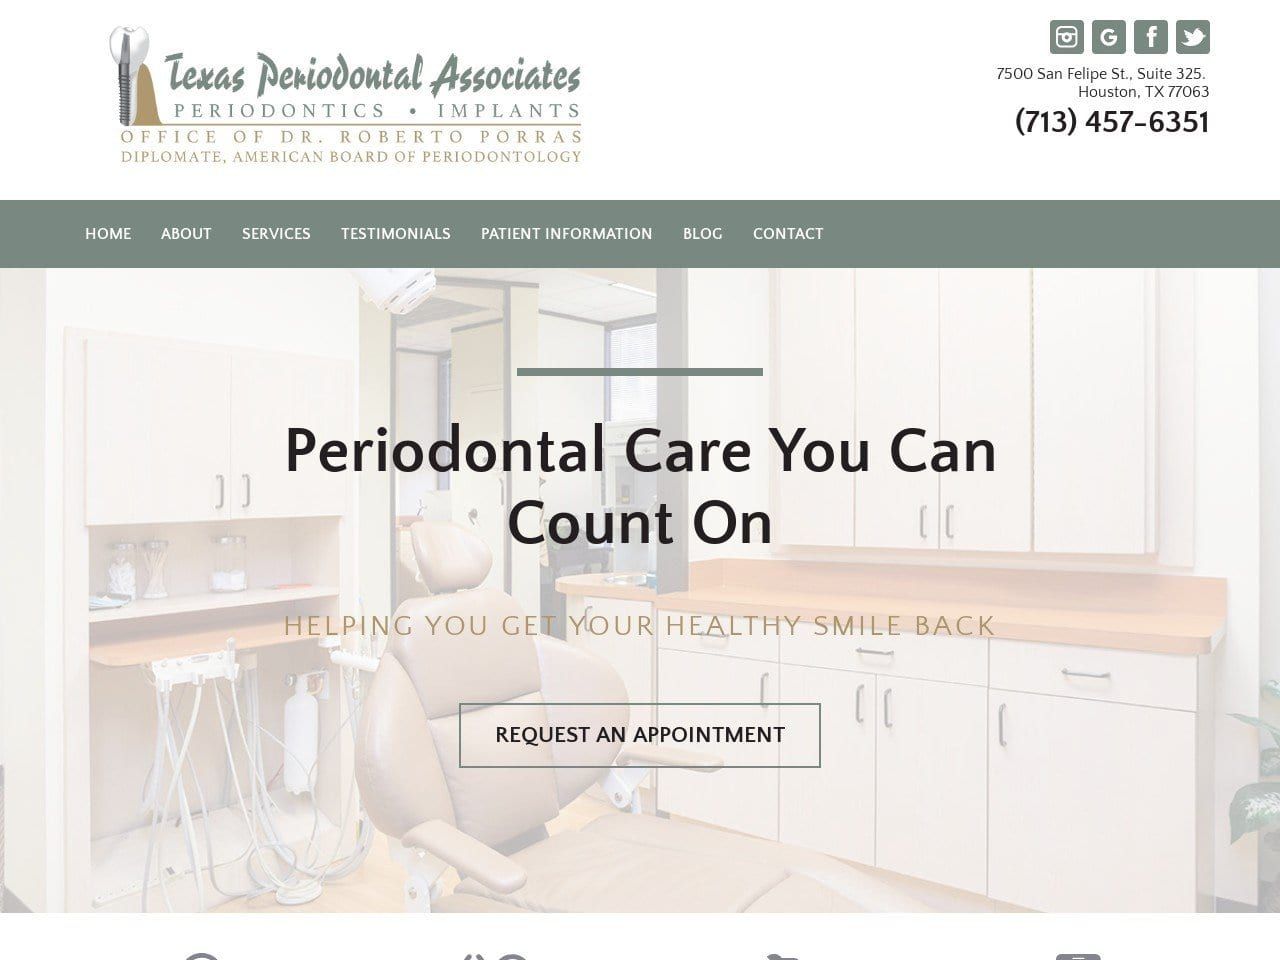 Texas Periodontal Associates Website Screenshot from texasperiodontal.com